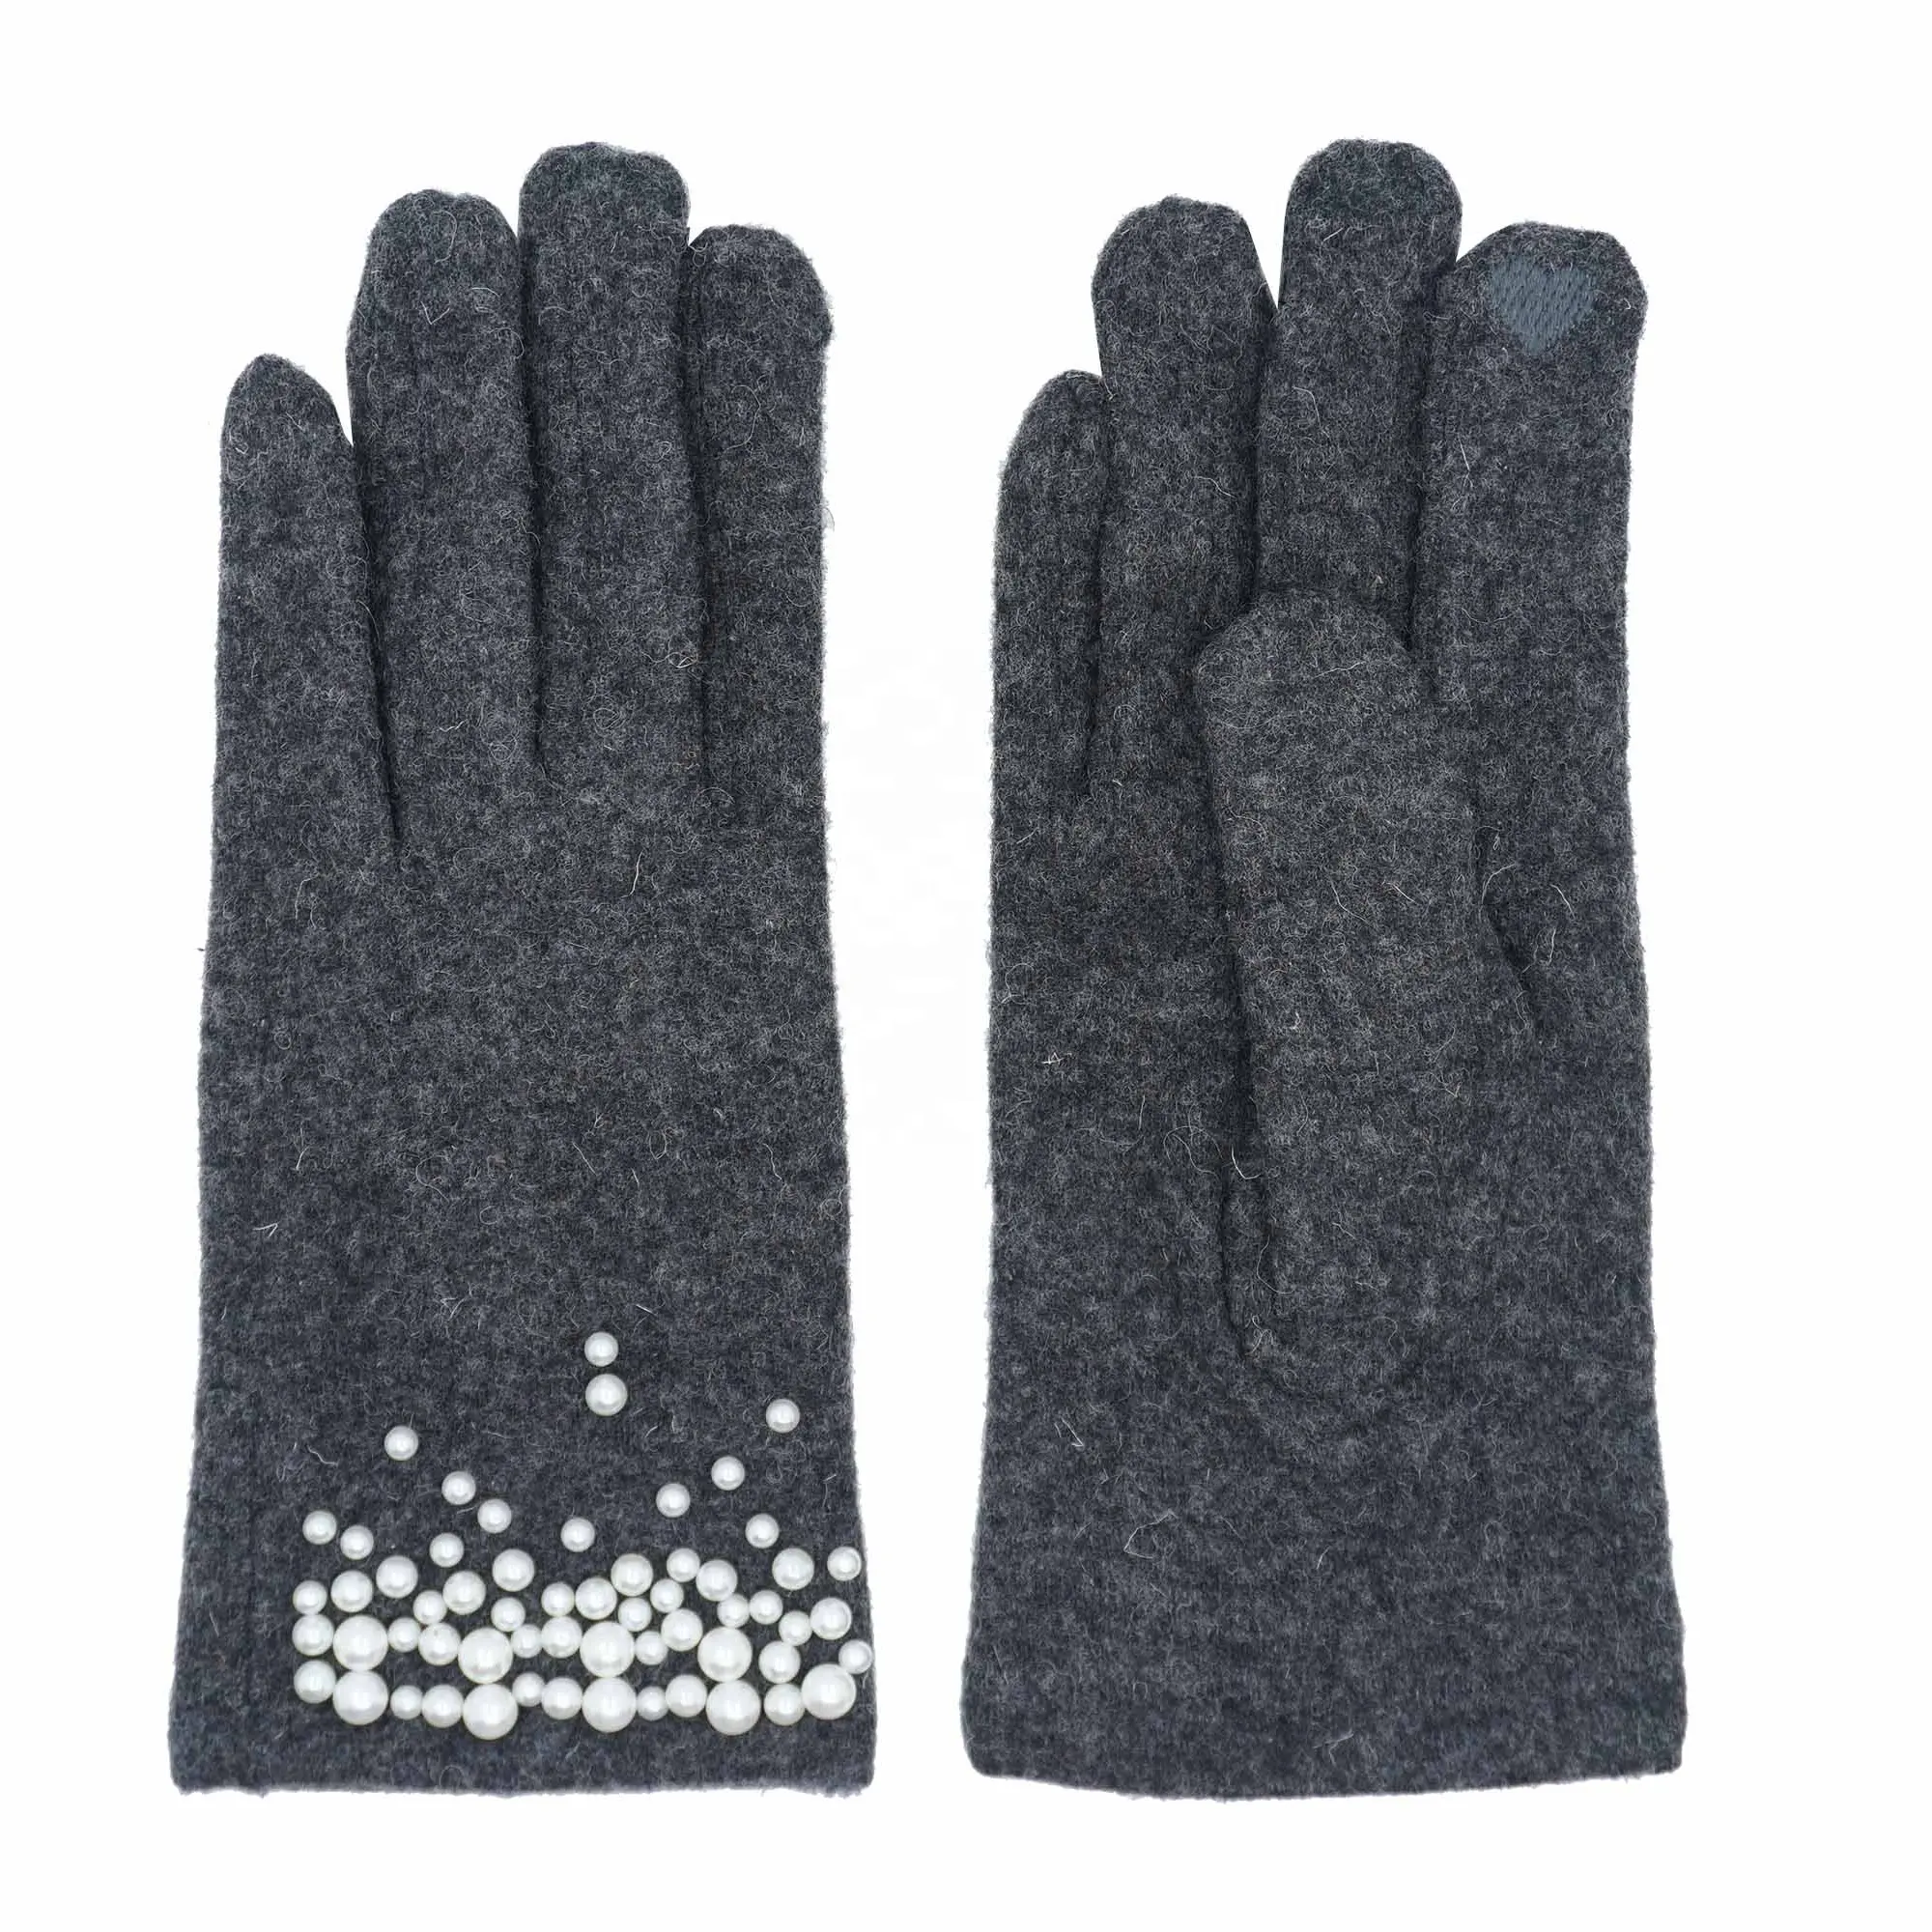 New elegant fashion lady gloves winter warm windproof gloves cuff artificial pearl decoration fleece mittens